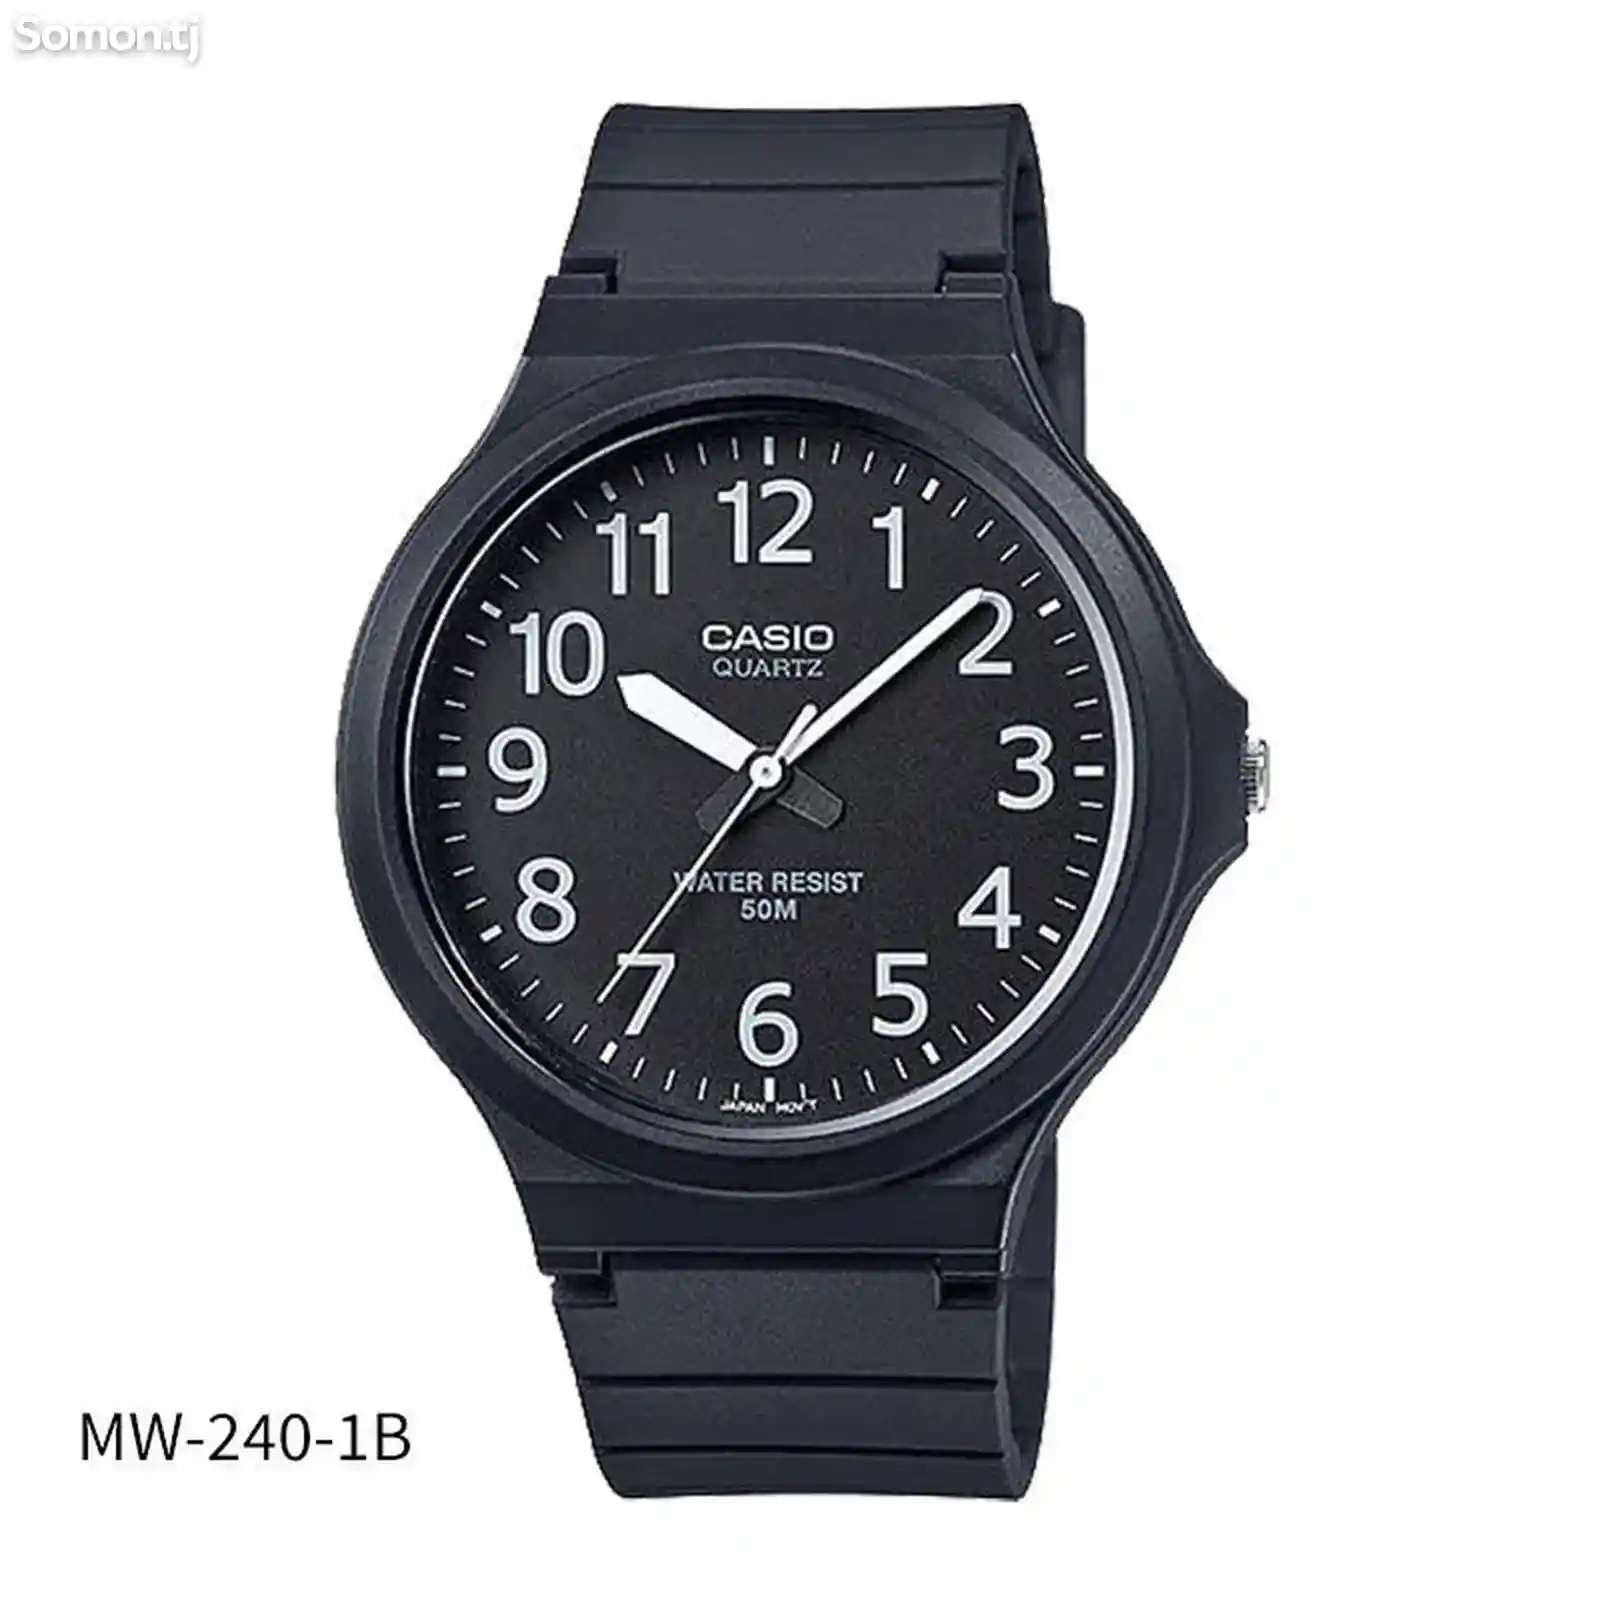 Мужские часы Casio MW-240-1B-1